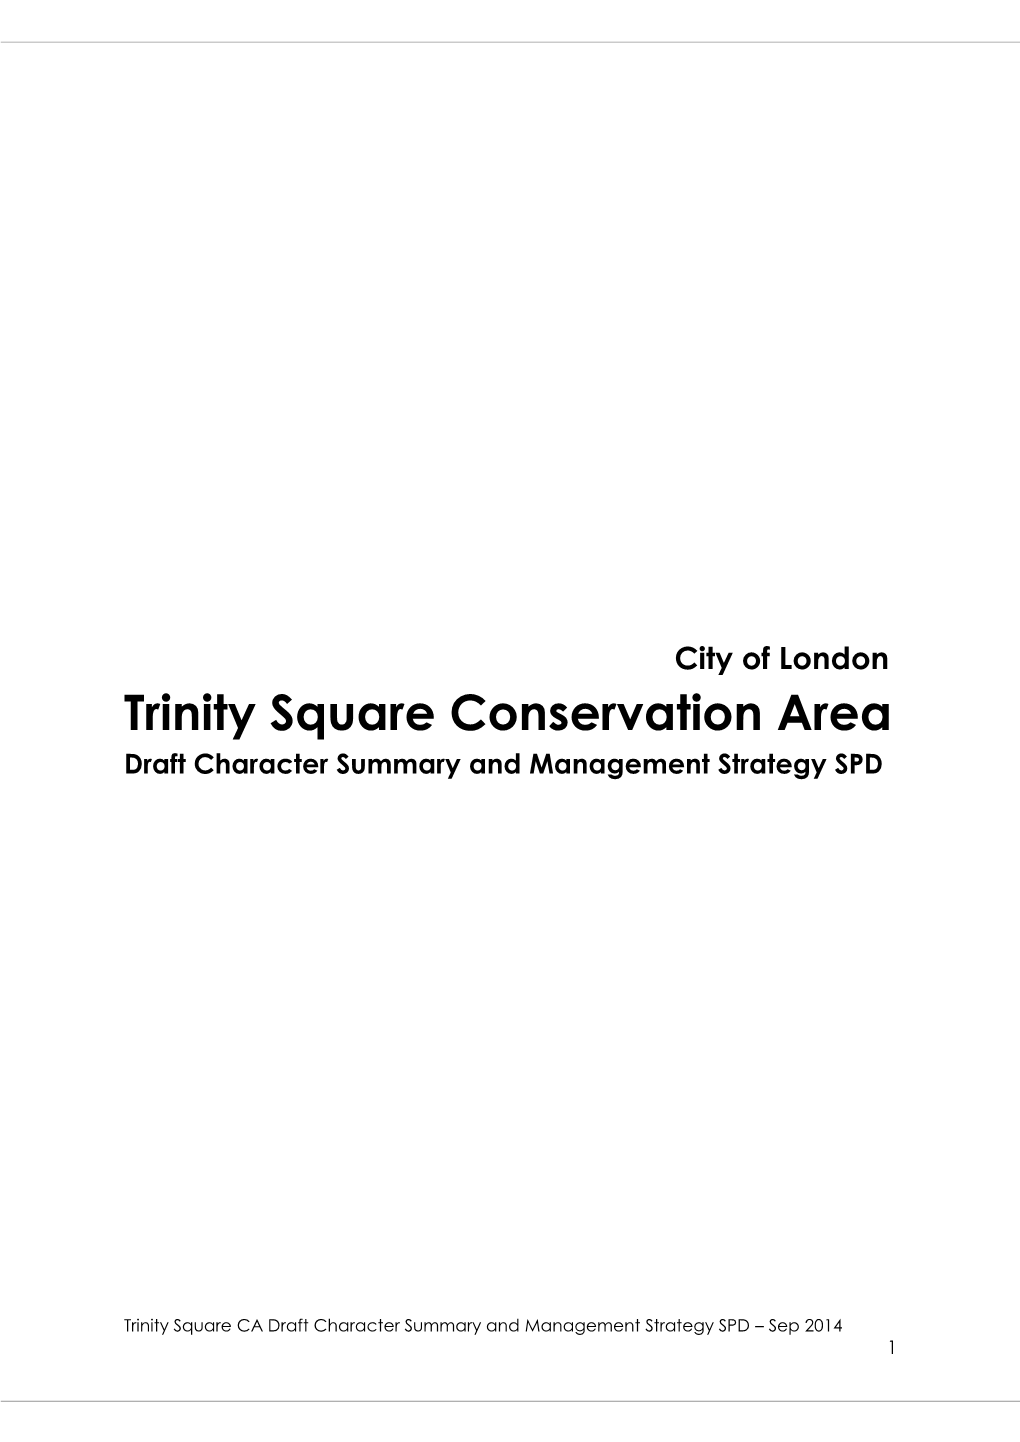 Trinity Conservation Area